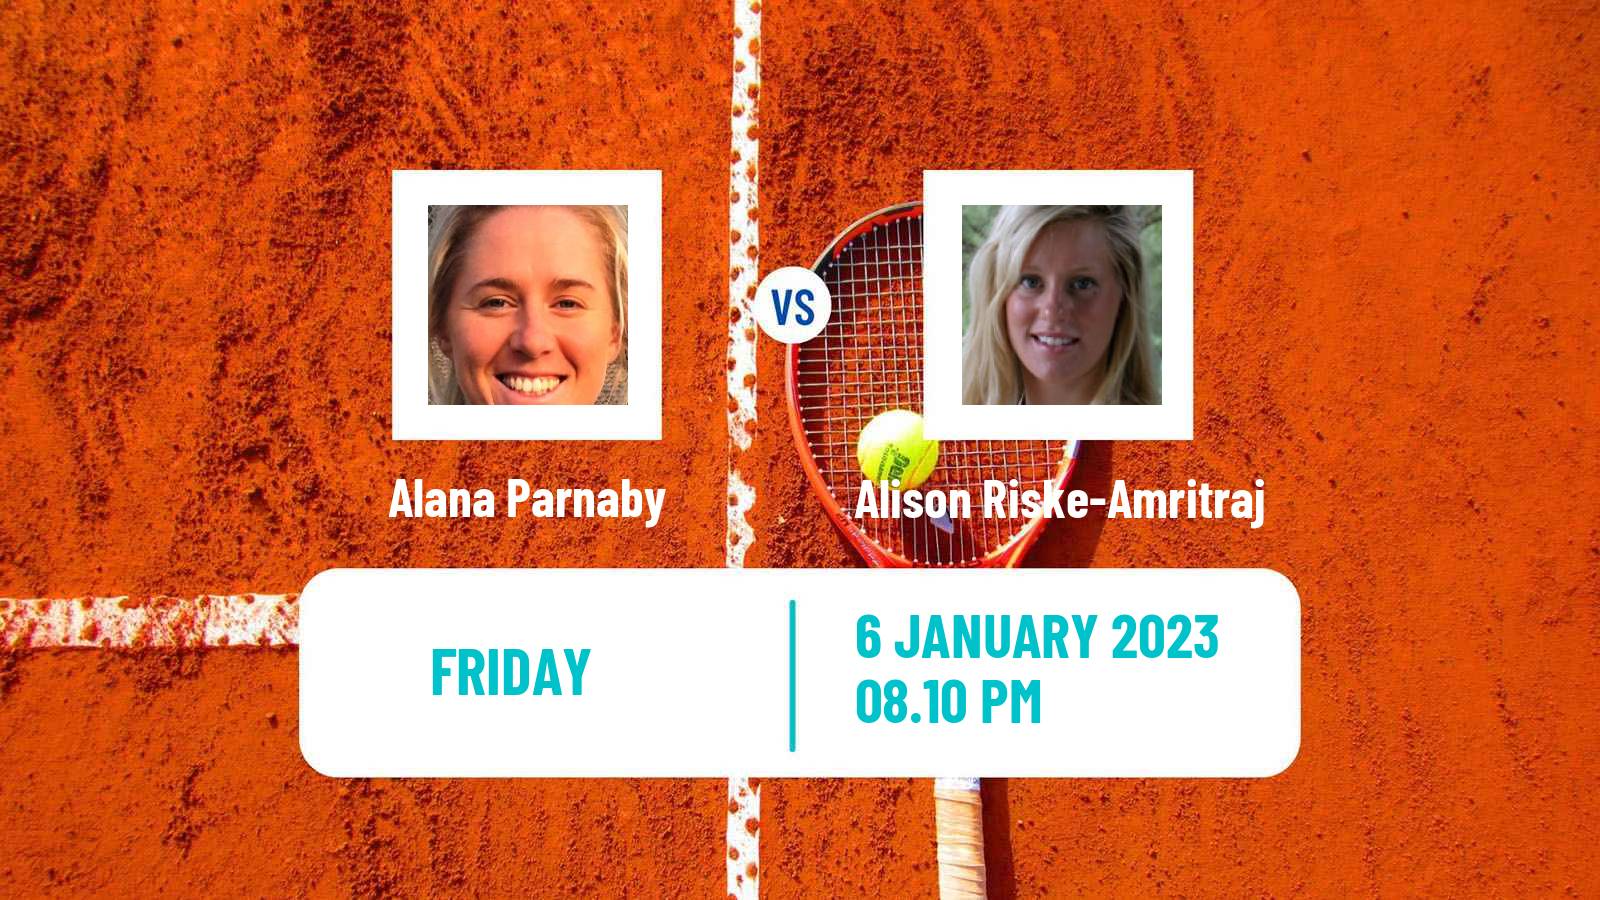 Tennis WTA Adelaide 2 Alana Parnaby - Alison Riske-Amritraj